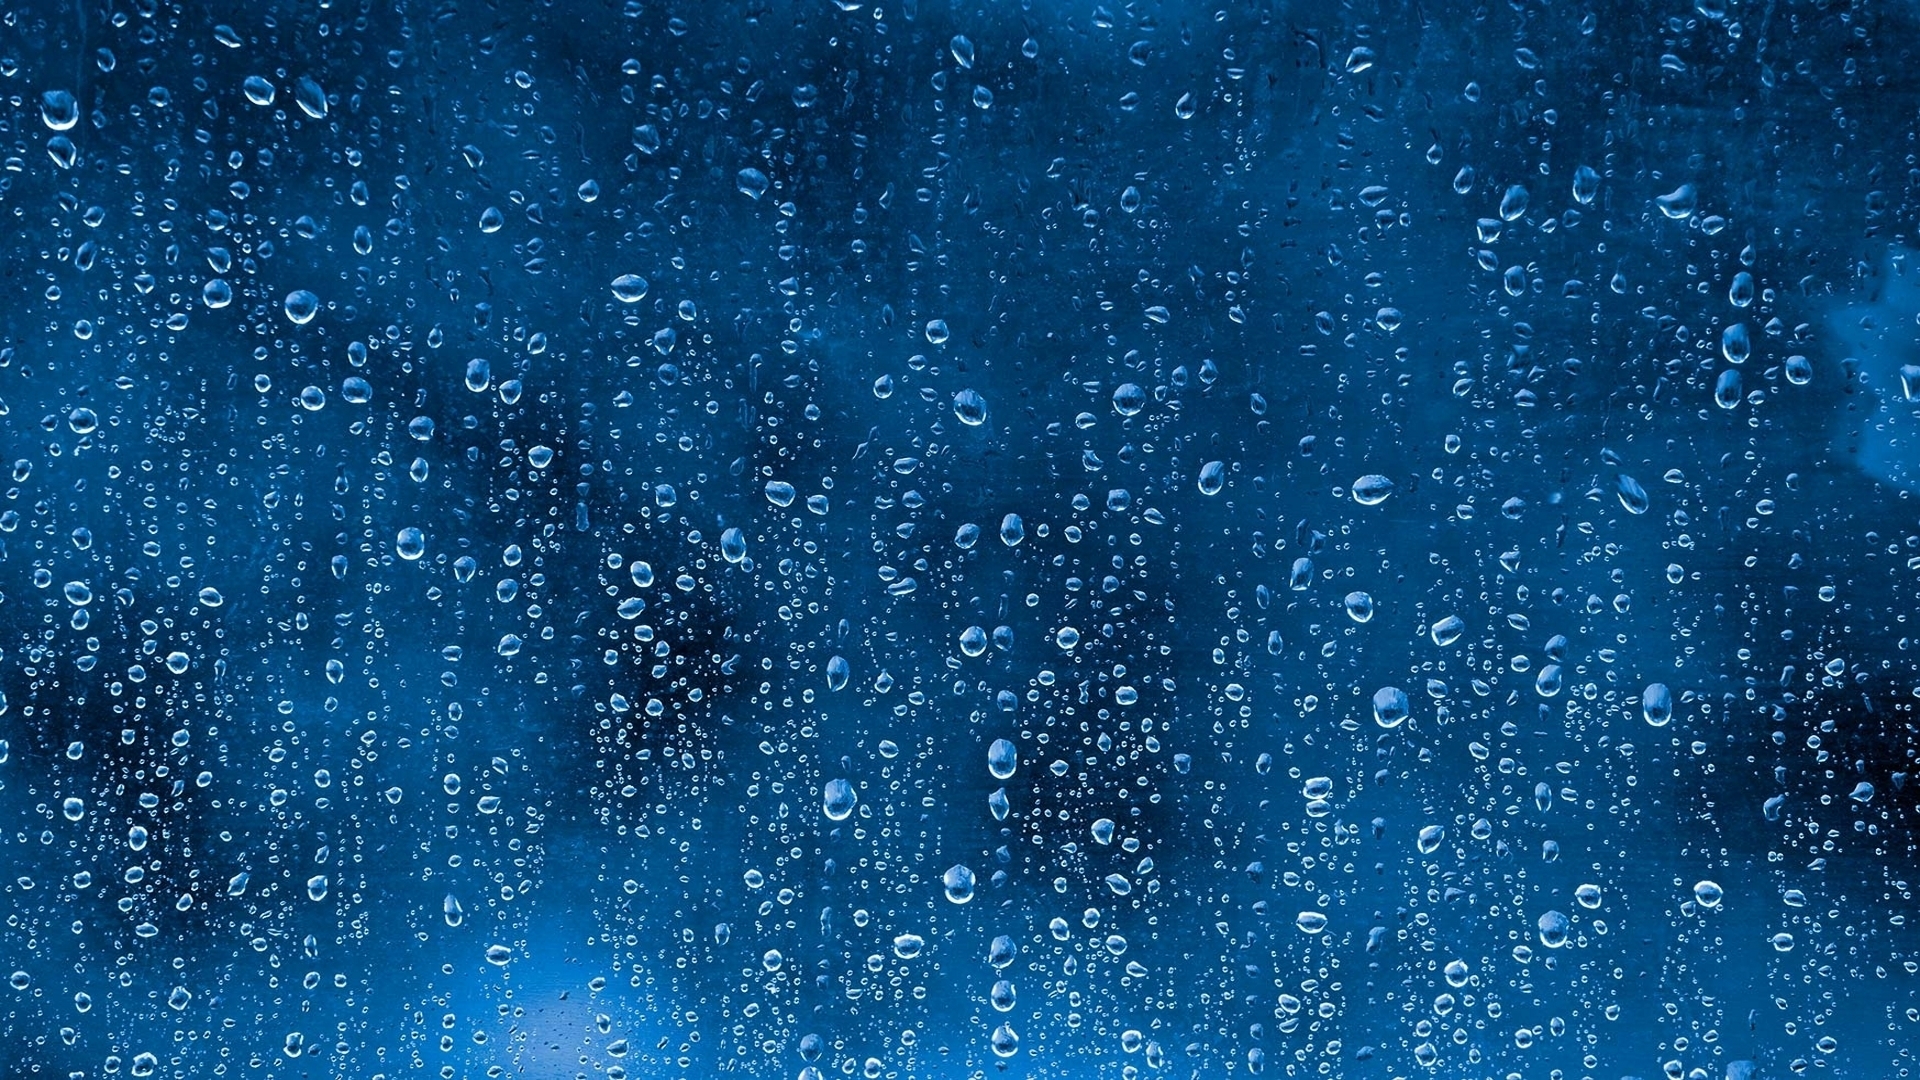  rain window glass reflection abstract bokeh wallpaper background